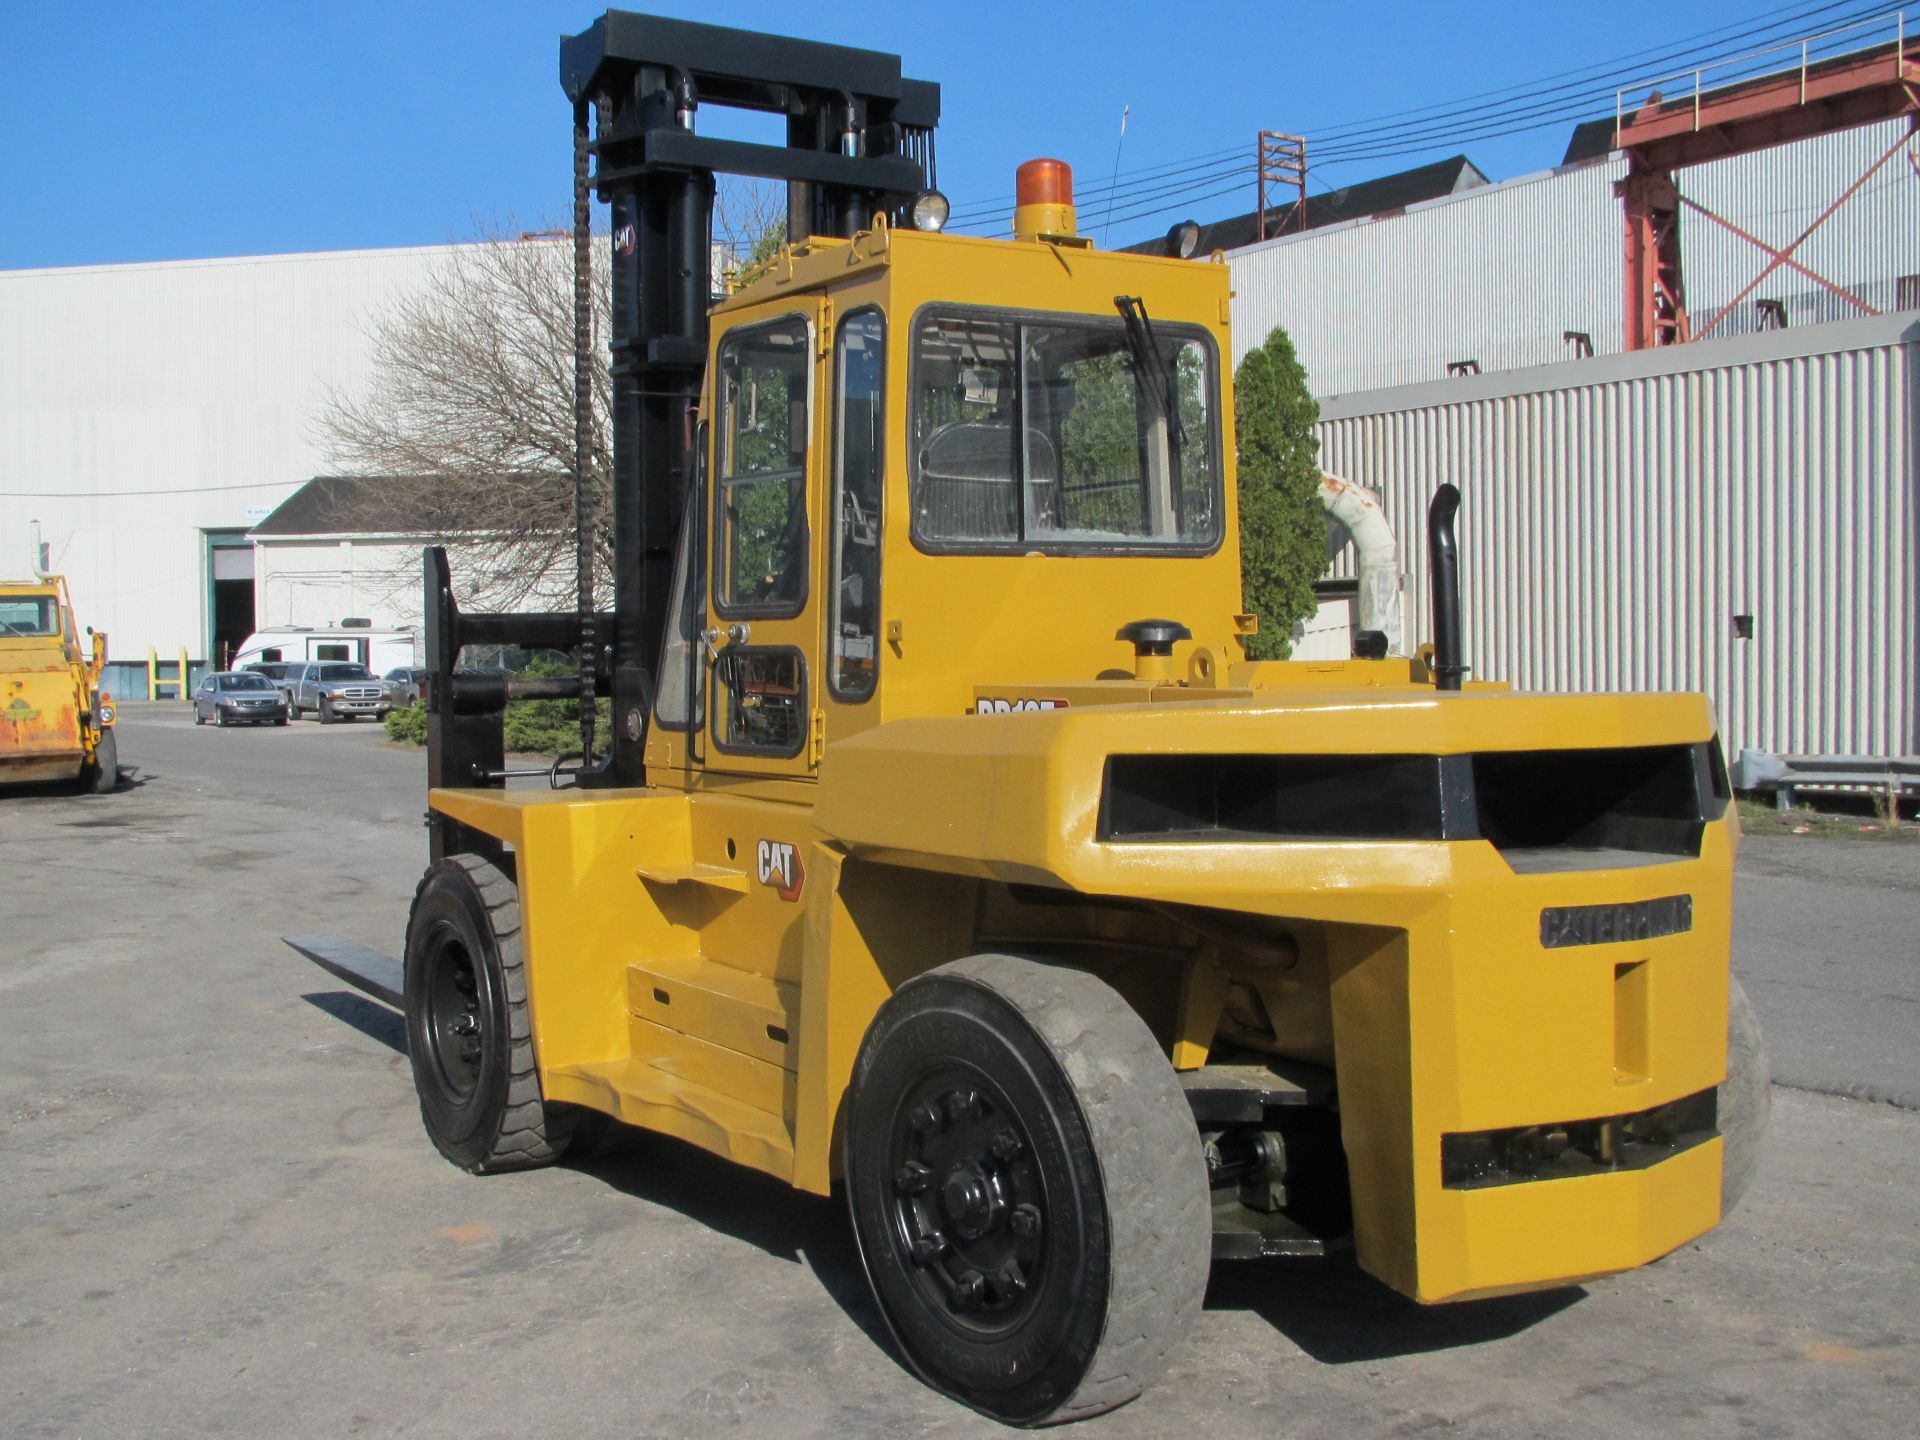 Caterpillar DP135 30,000 lb Forklift - Image 6 of 14